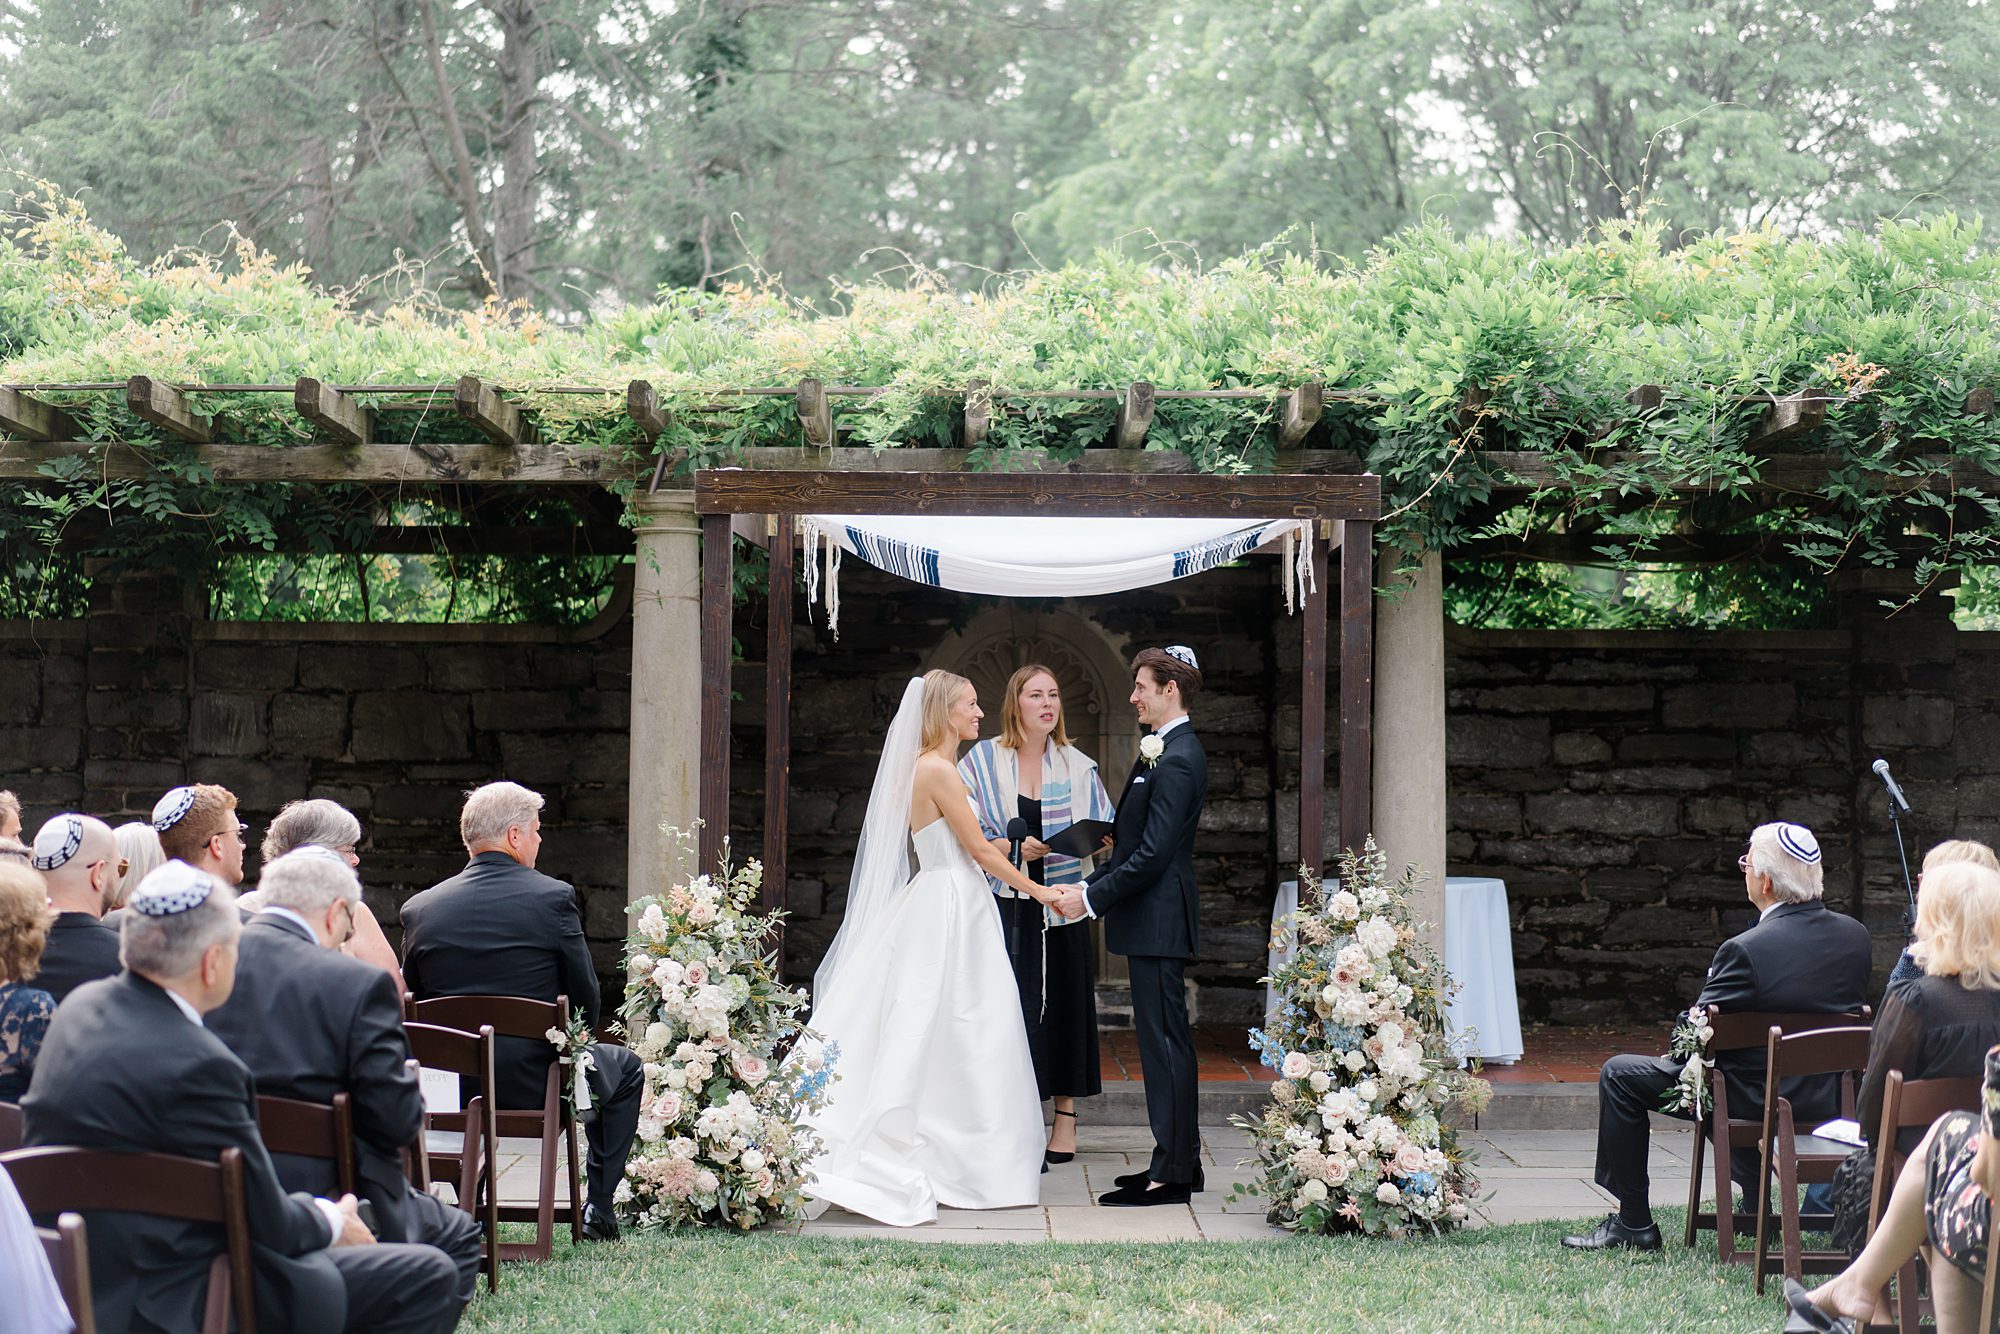 bride and groom exchange vows at outdoor wedding ceremony